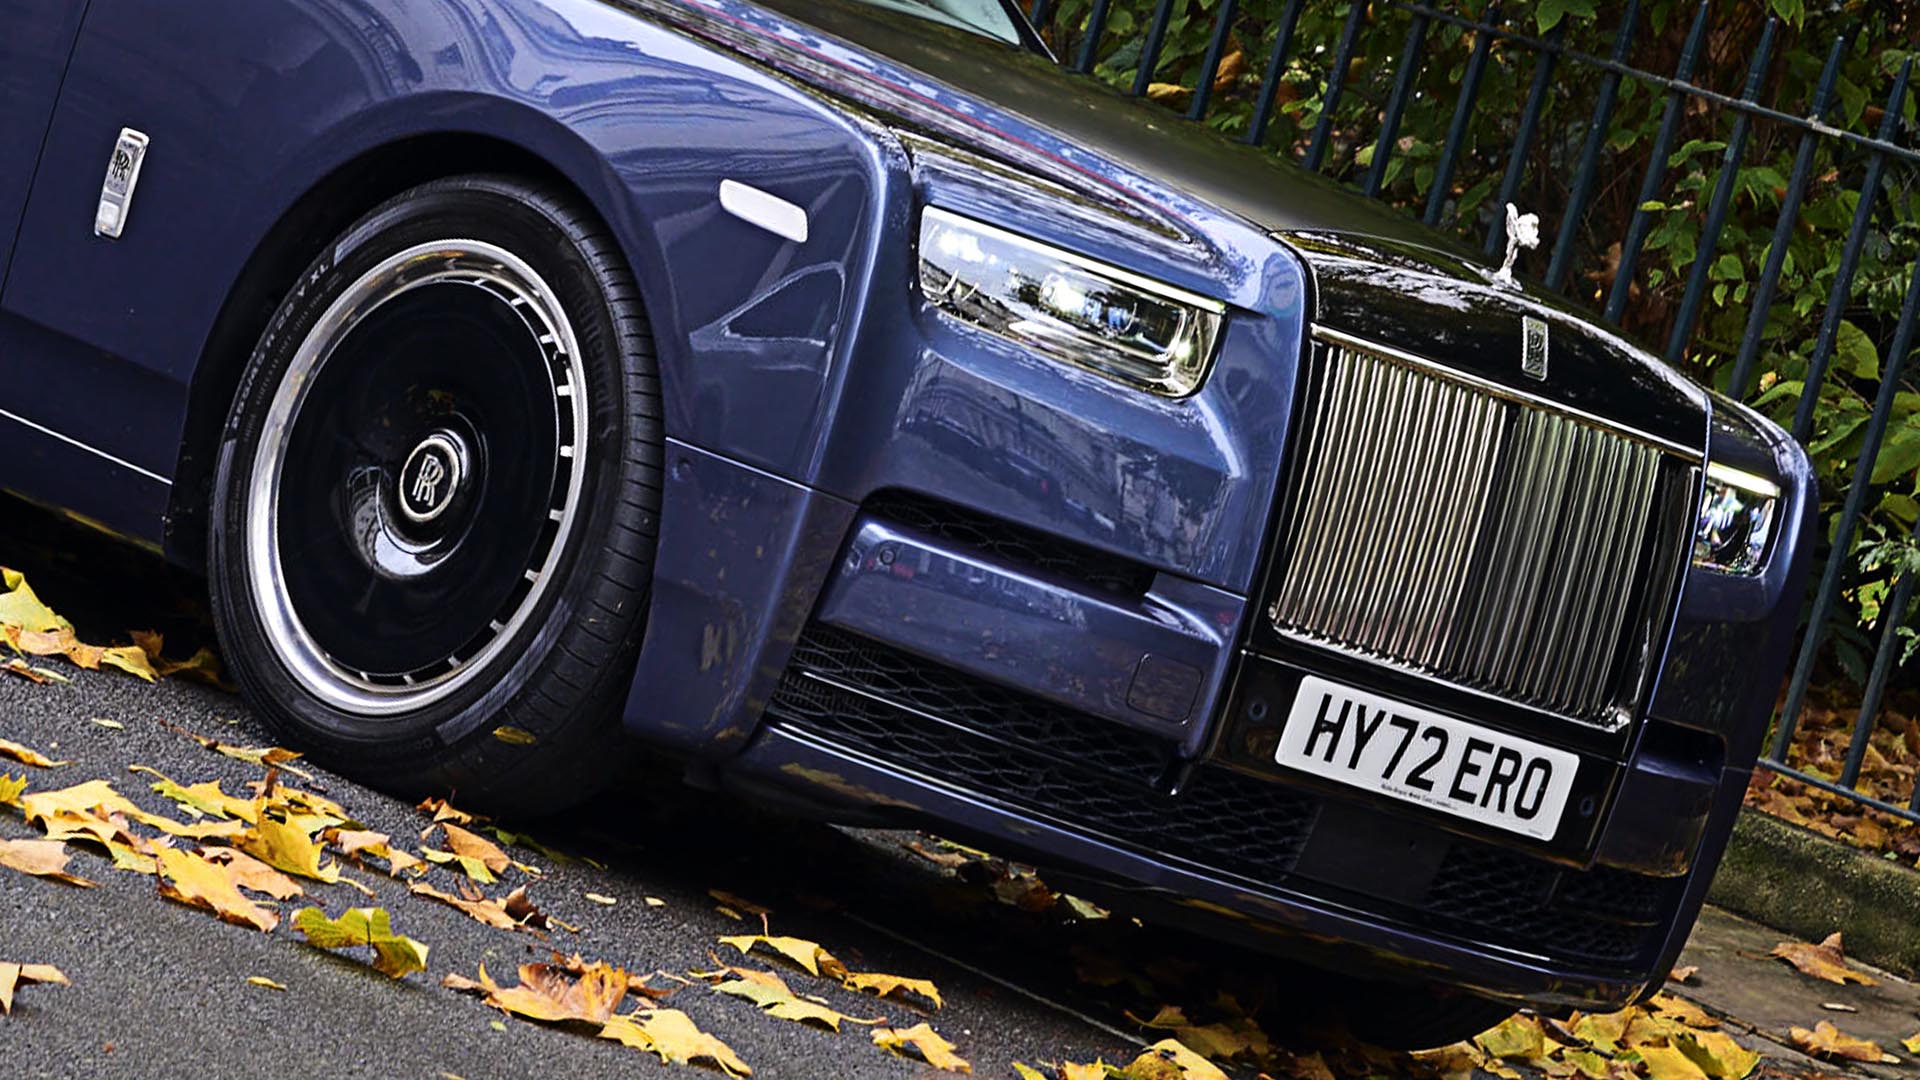 Rolls Royce Phantom 8 hire London  Chauffour Driven Service  Book now